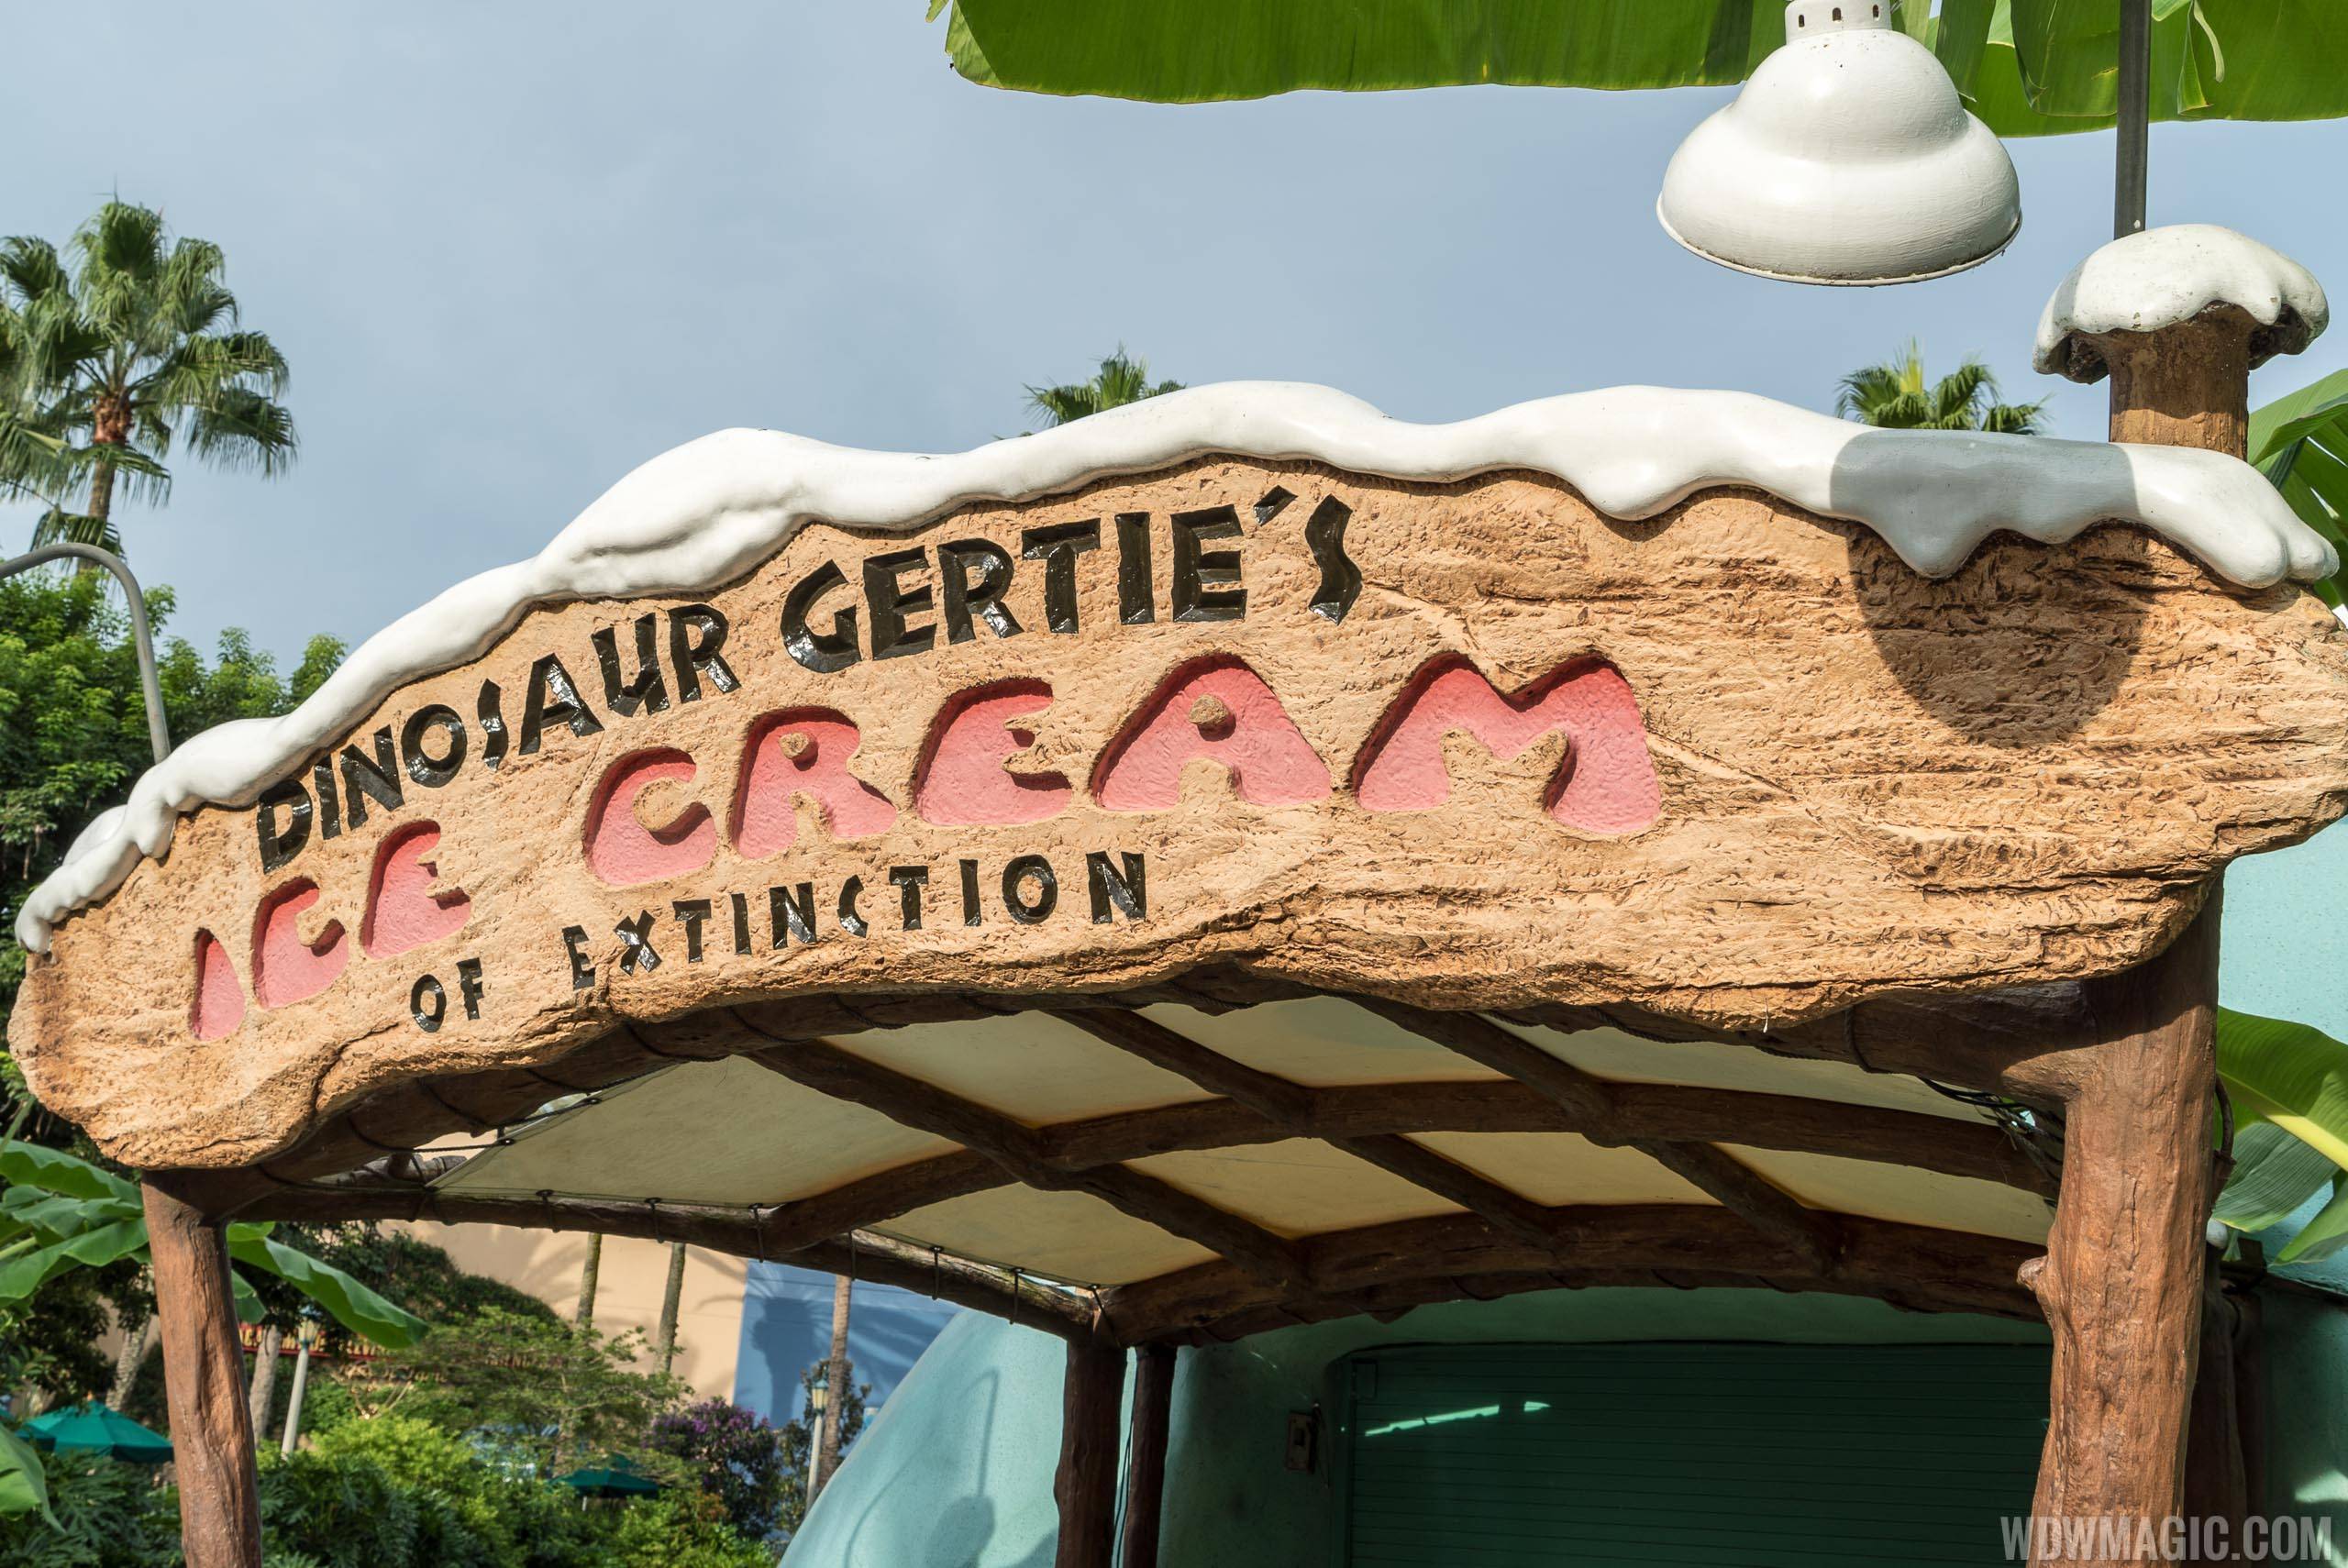 Dinosaur Gerties Ice Cream of Extinction signage